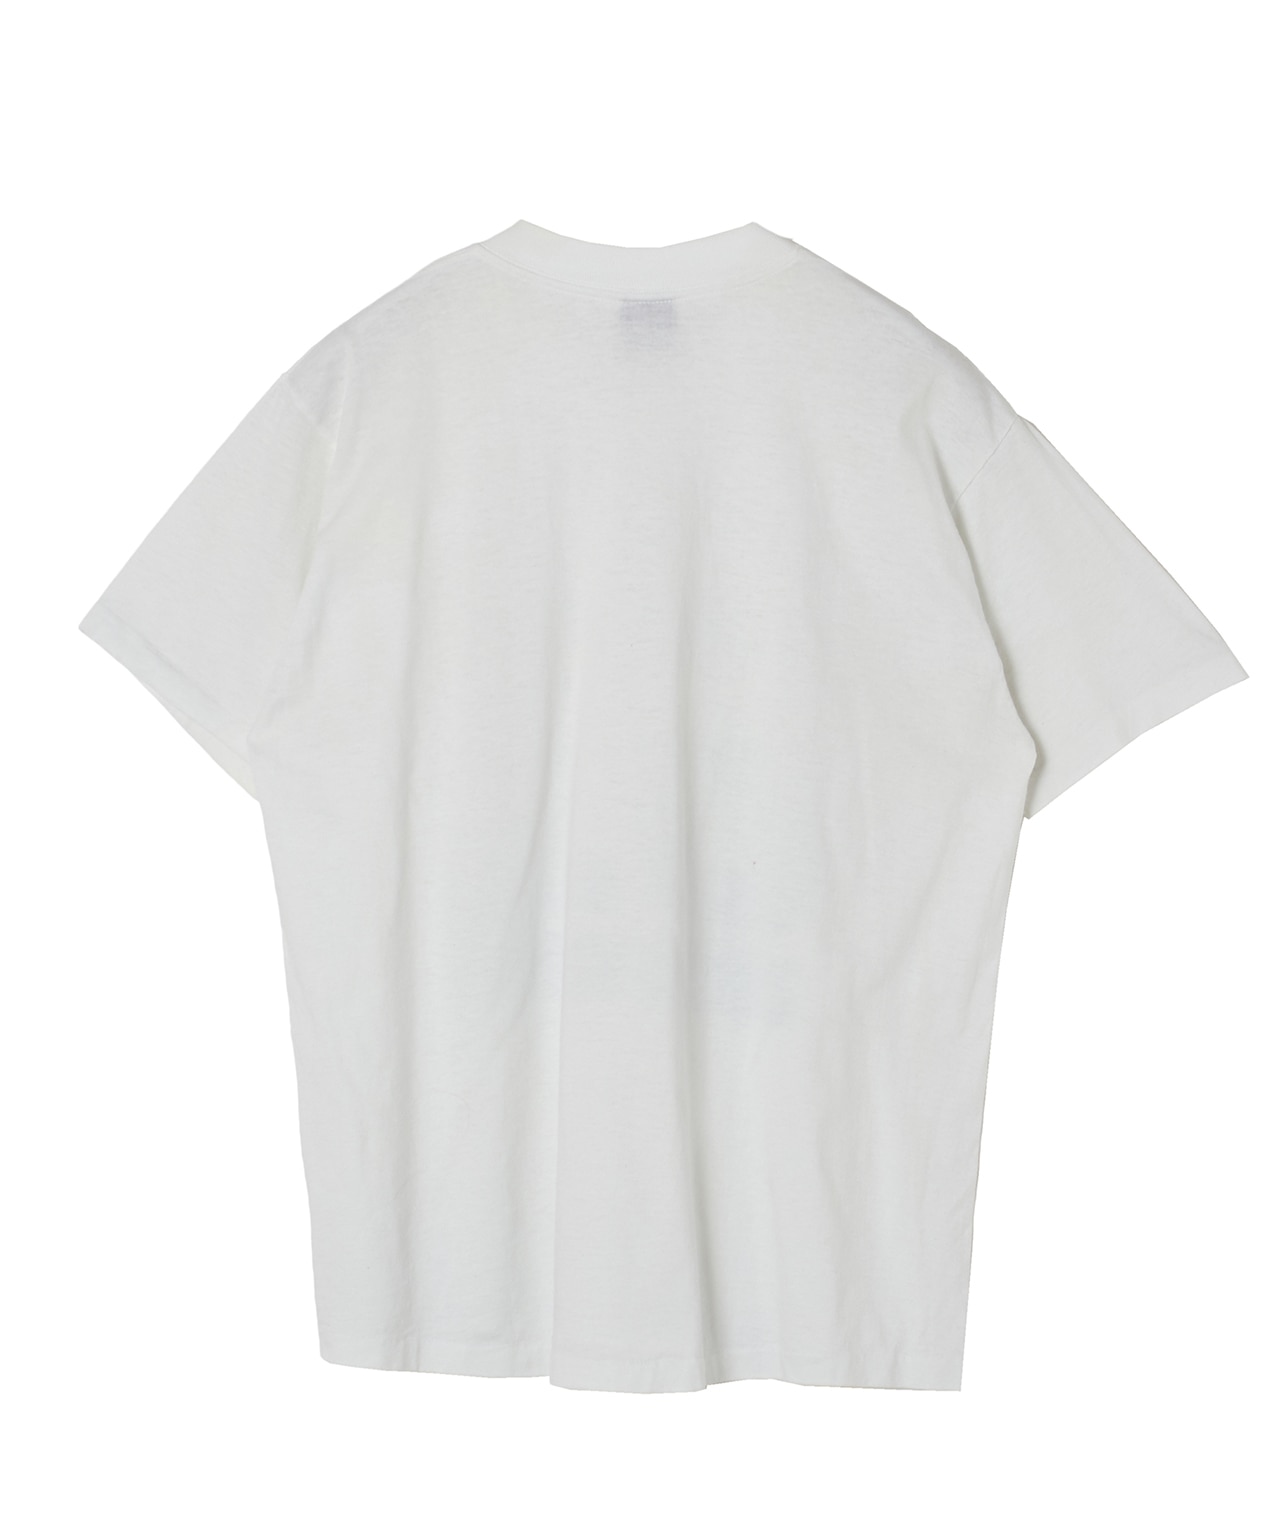 USED/RESEDA HIGH SCHOOLプリントTシャツ 詳細画像 ホワイト 2